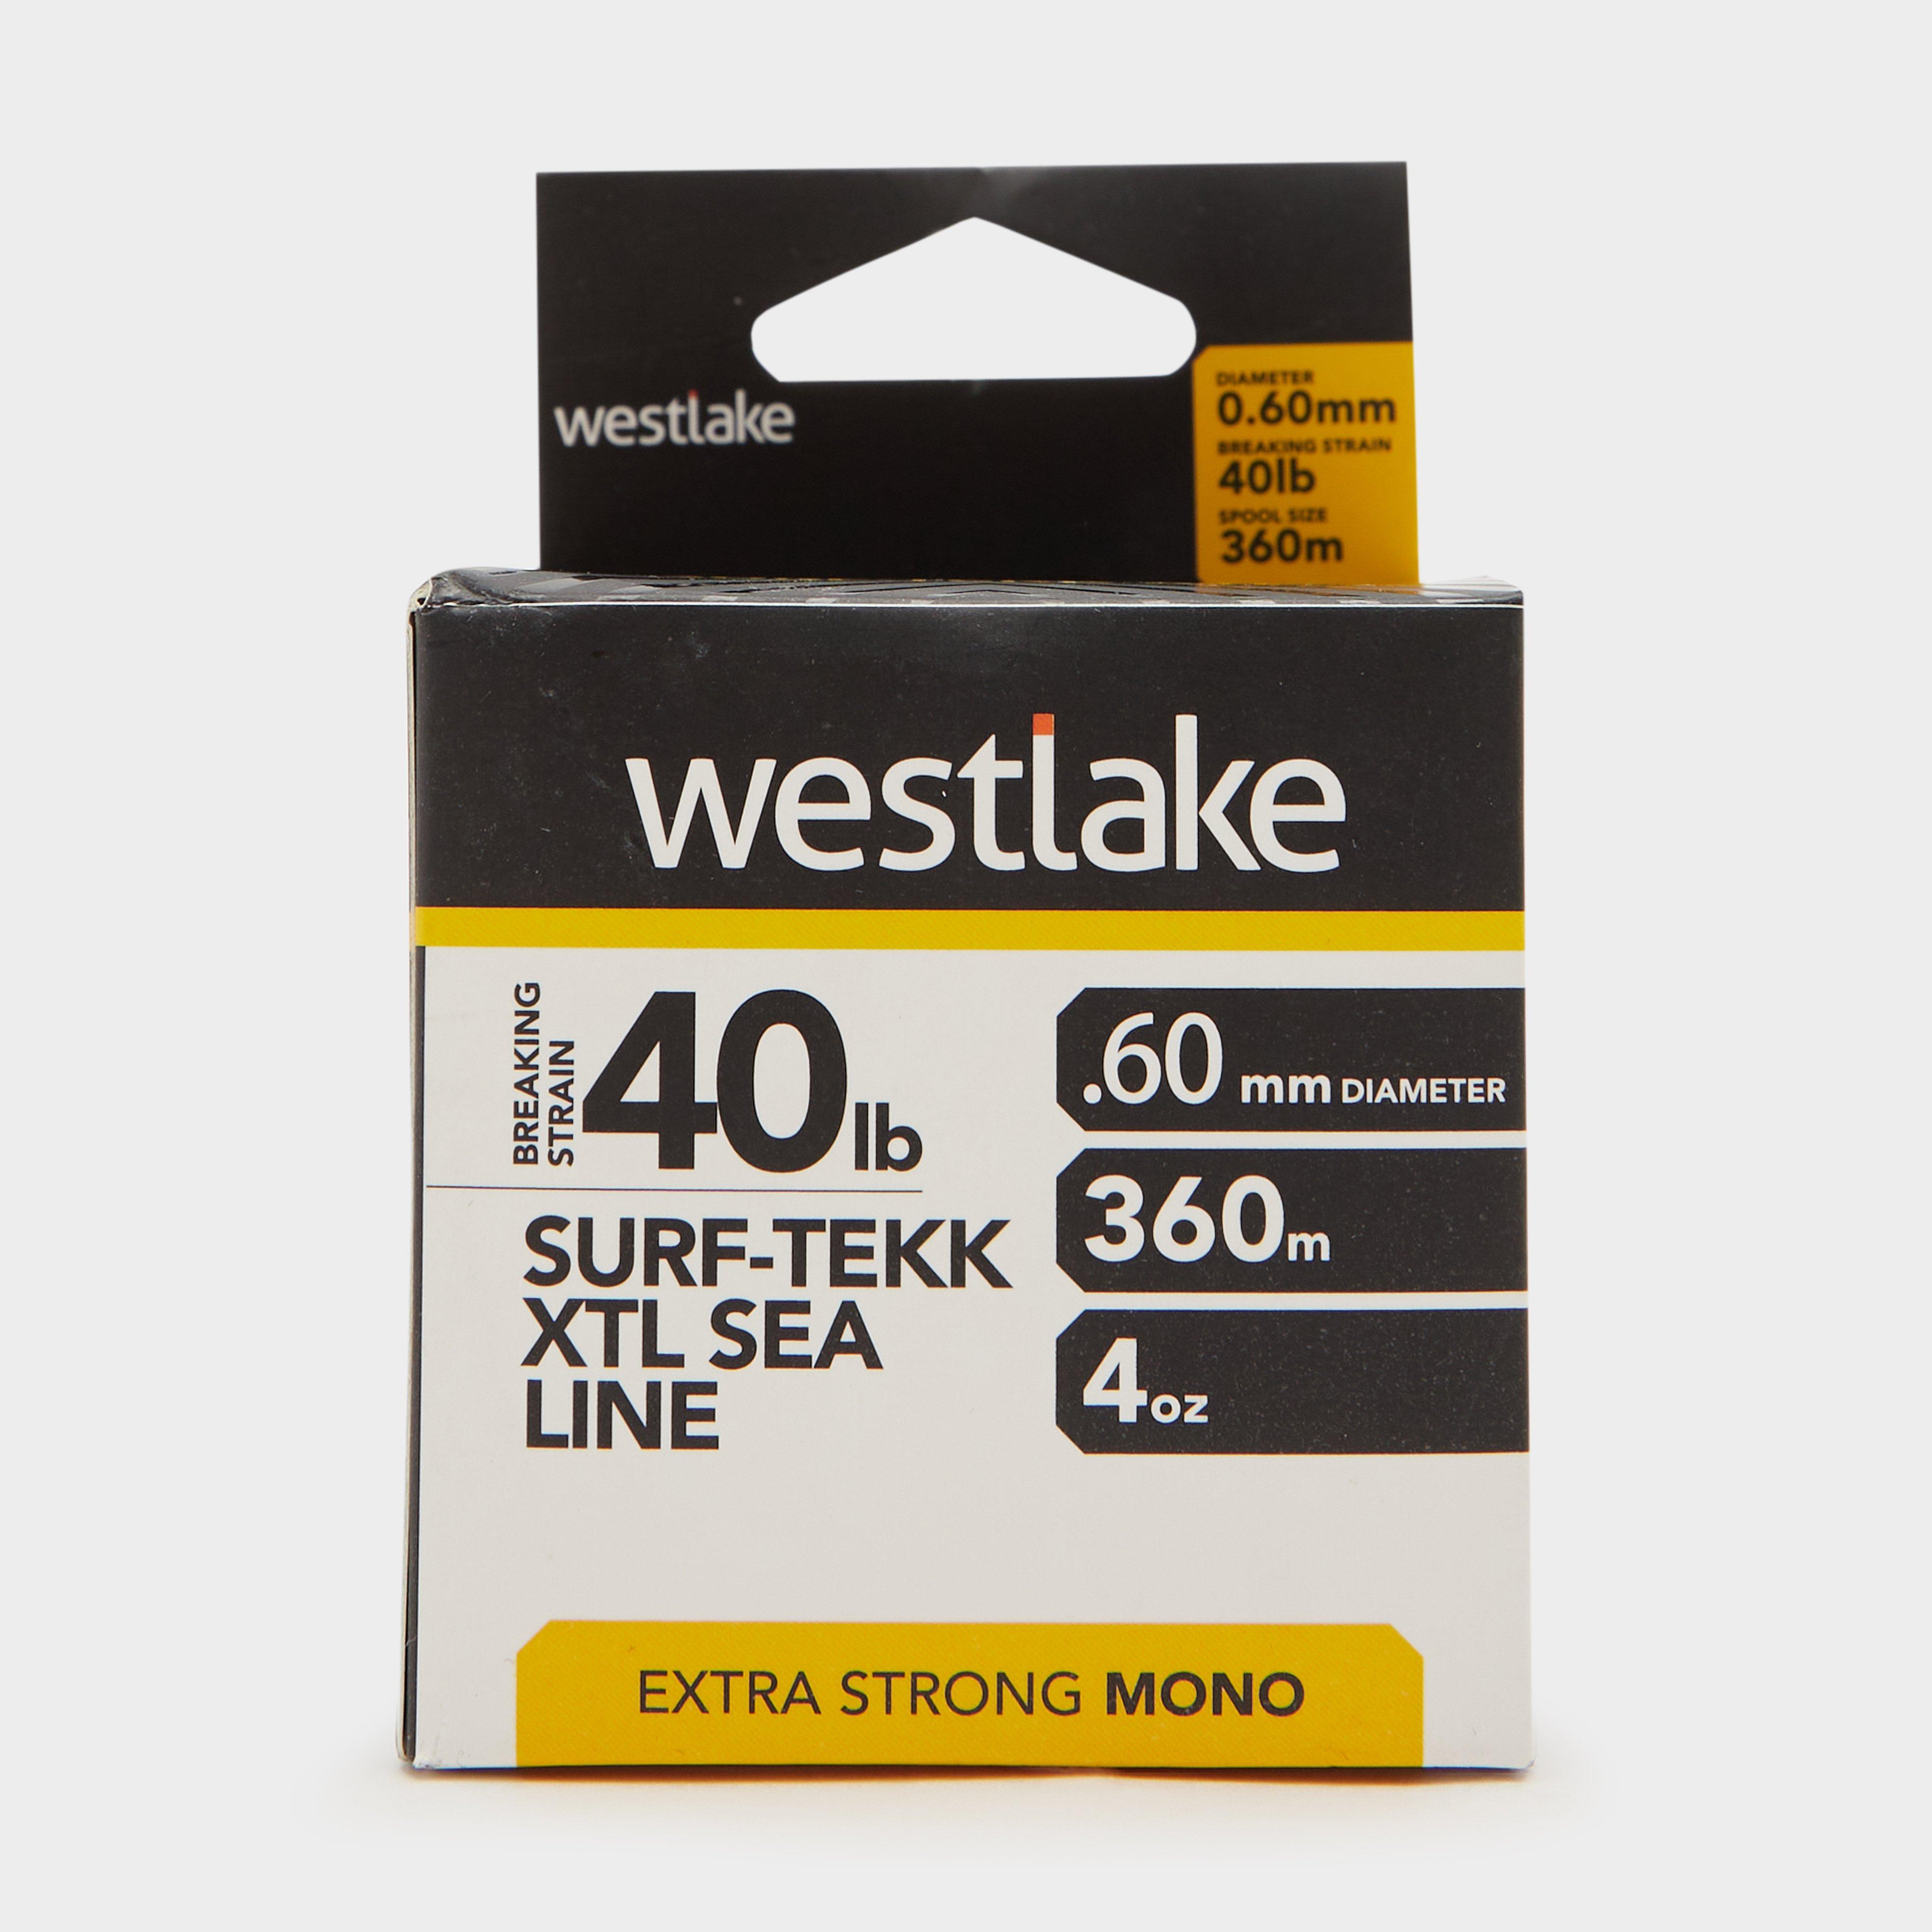 Westlake Surf-tekk Xtl Sea Line 40lb 4oz - Multi/4oz  Multi/4oz